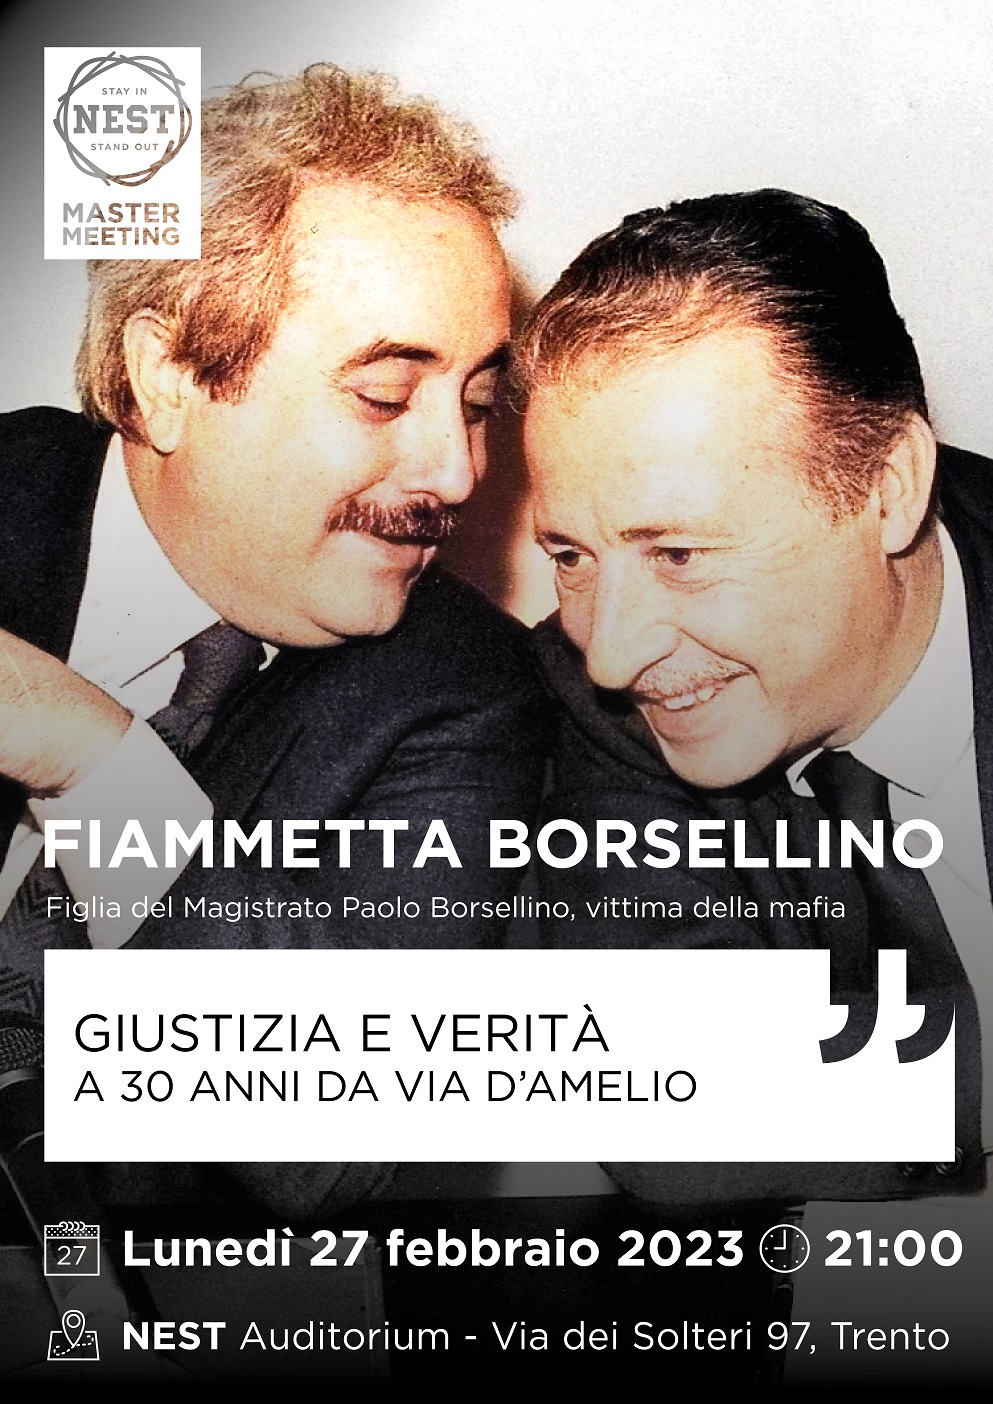 Master Meeting - FIAMMETTA BORSELLINO